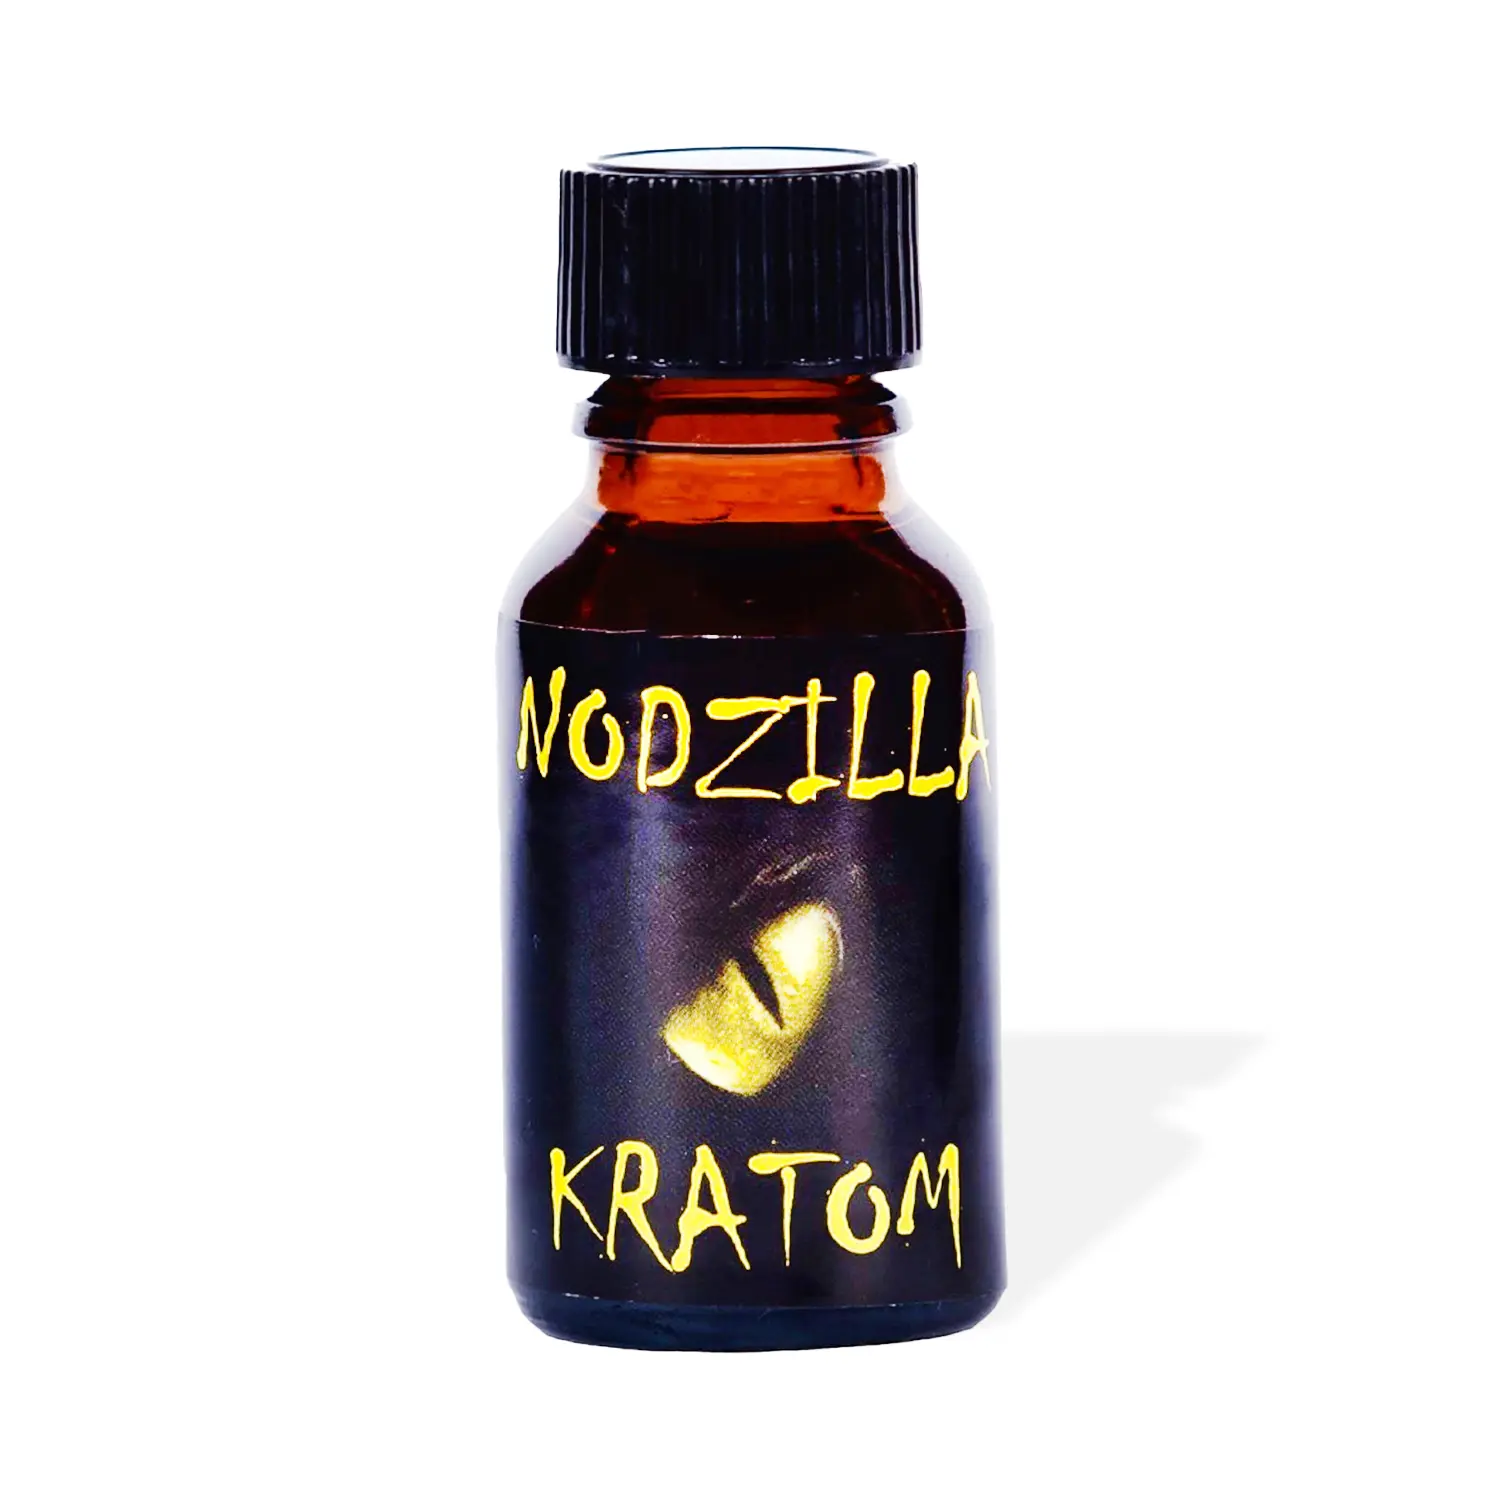 Nodzilla Kratom Liquid Extract Shot